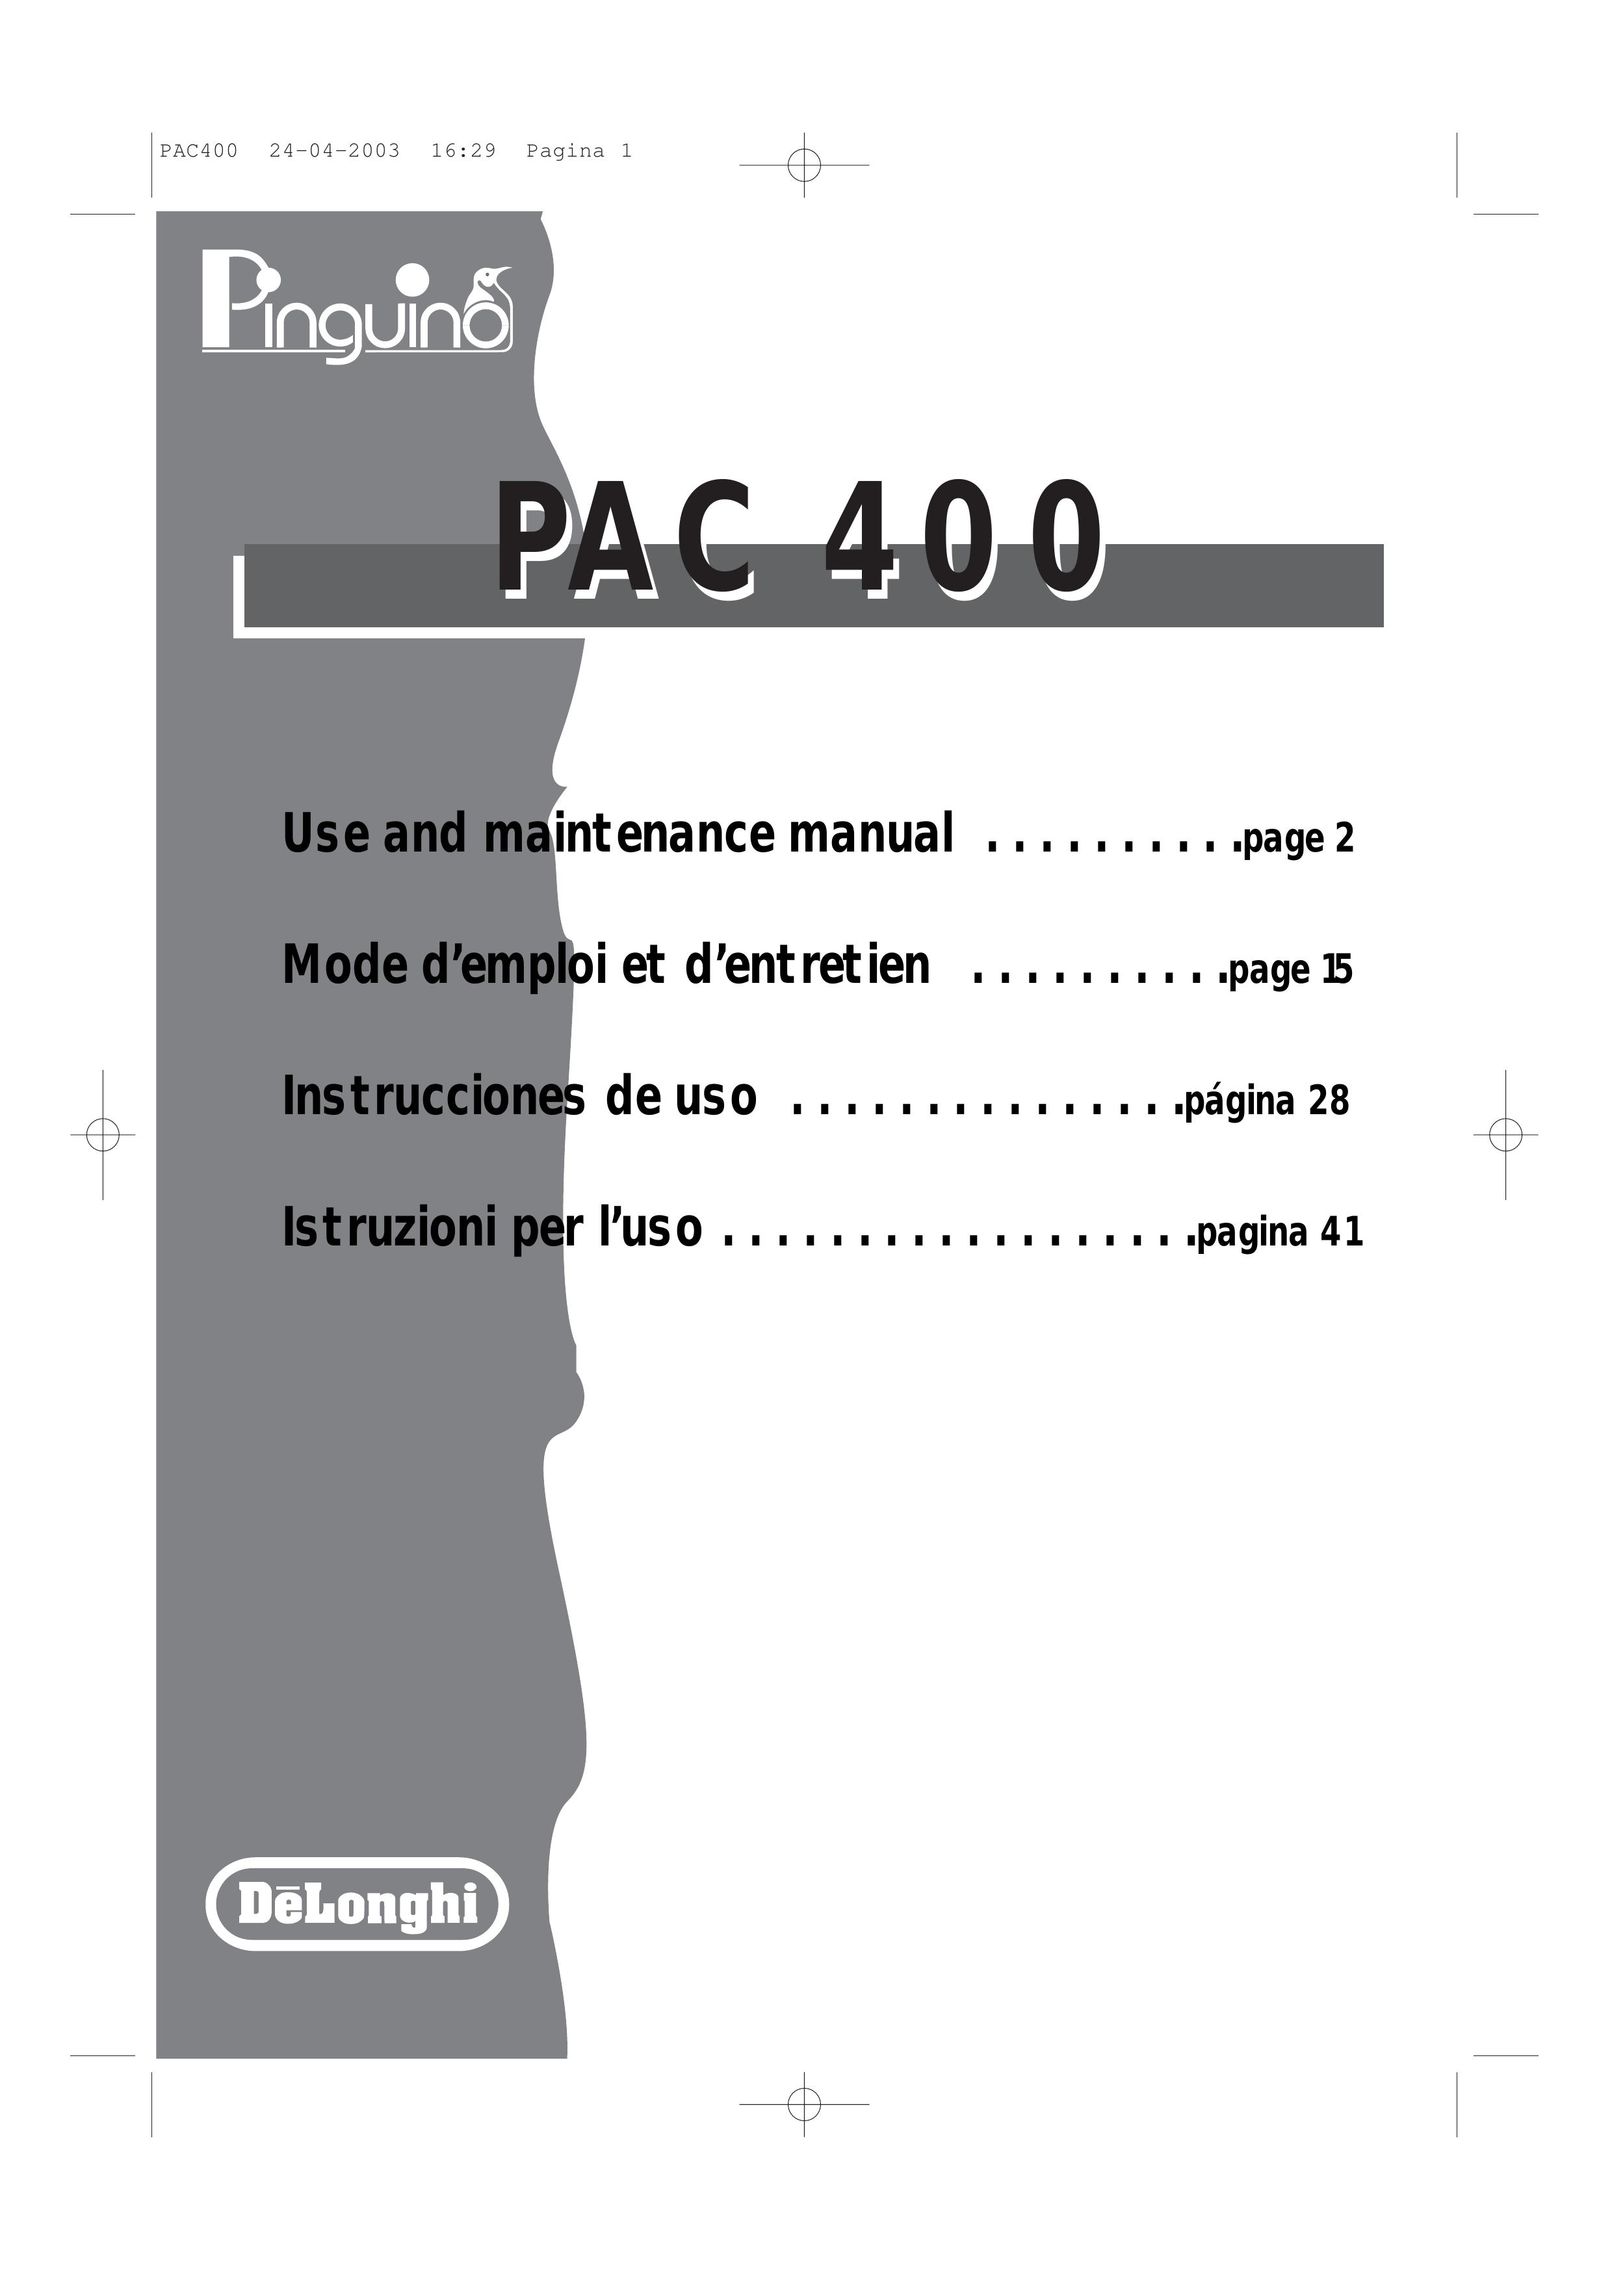 DeLonghi PAC 400 Air Conditioner User Manual